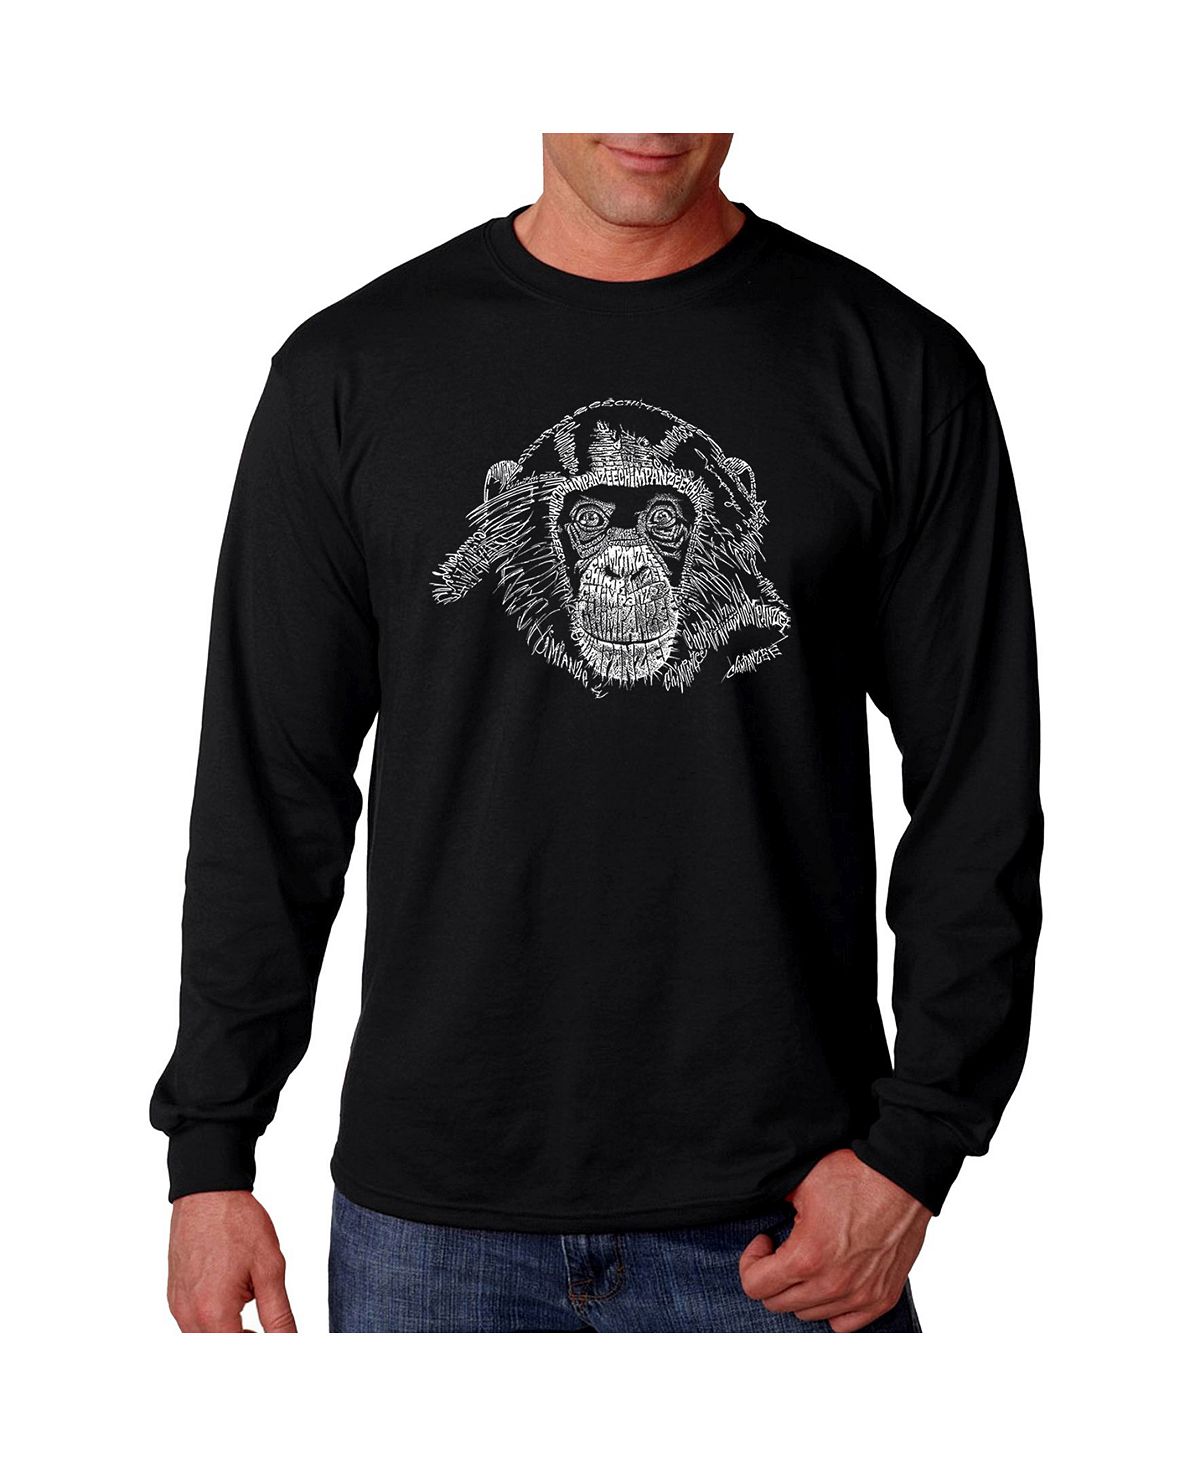 Мужская футболка word art - шимпанзе с длинным рукавом LA Pop Art, черный мужская футболка с длинным рукавом word art la pop art черный